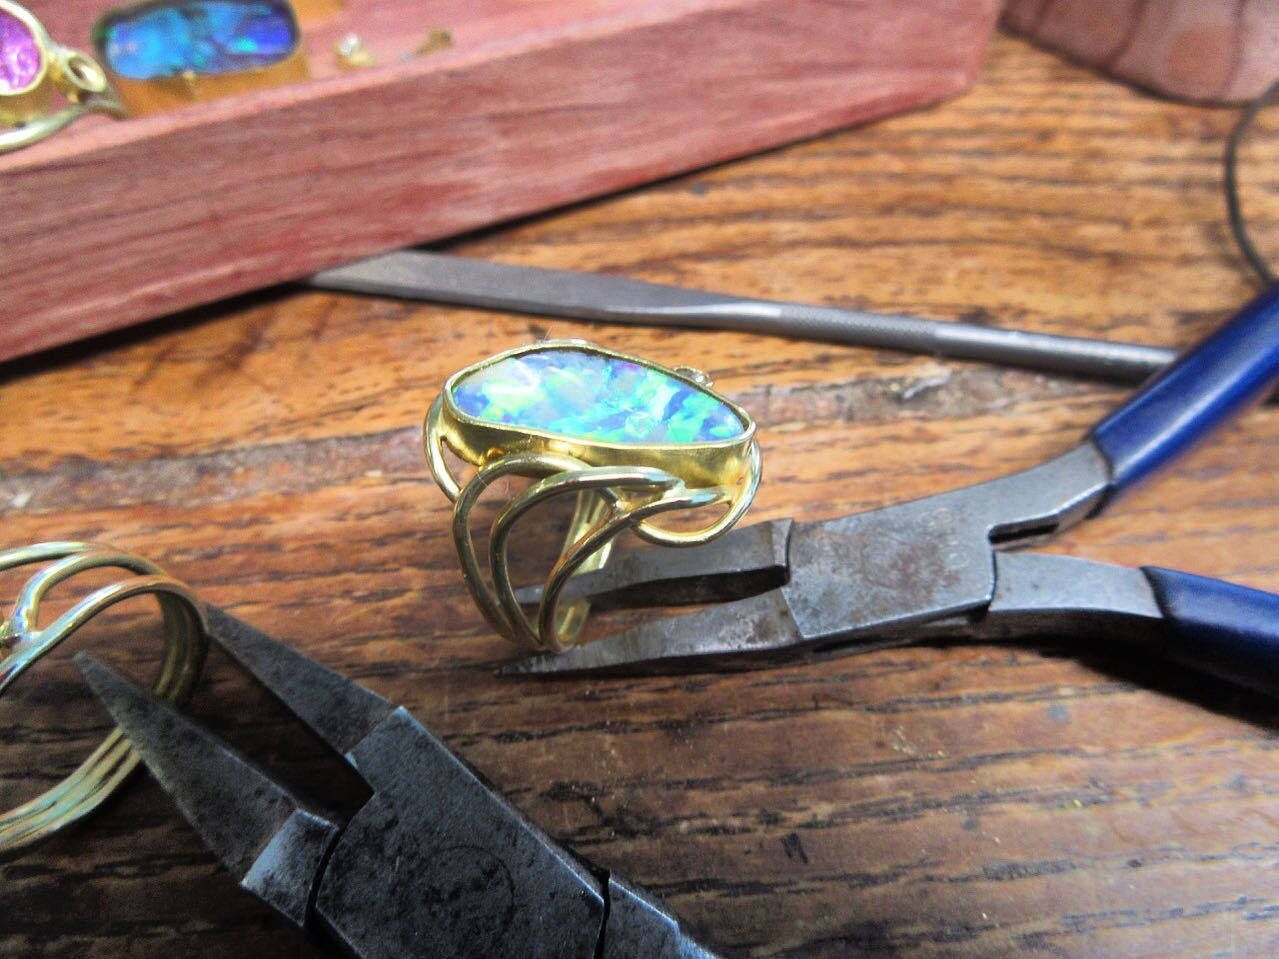 New 4.02 carat boulder opal ring, designed and created by Karen.

.
.
.
#karenldavidson #karendavidson #sterlingsilver #opal #pendant #handmade #customjewelry #customjeweler #process #handmade #cabochongems #blackopal
#treeoflife #designprocess #hand